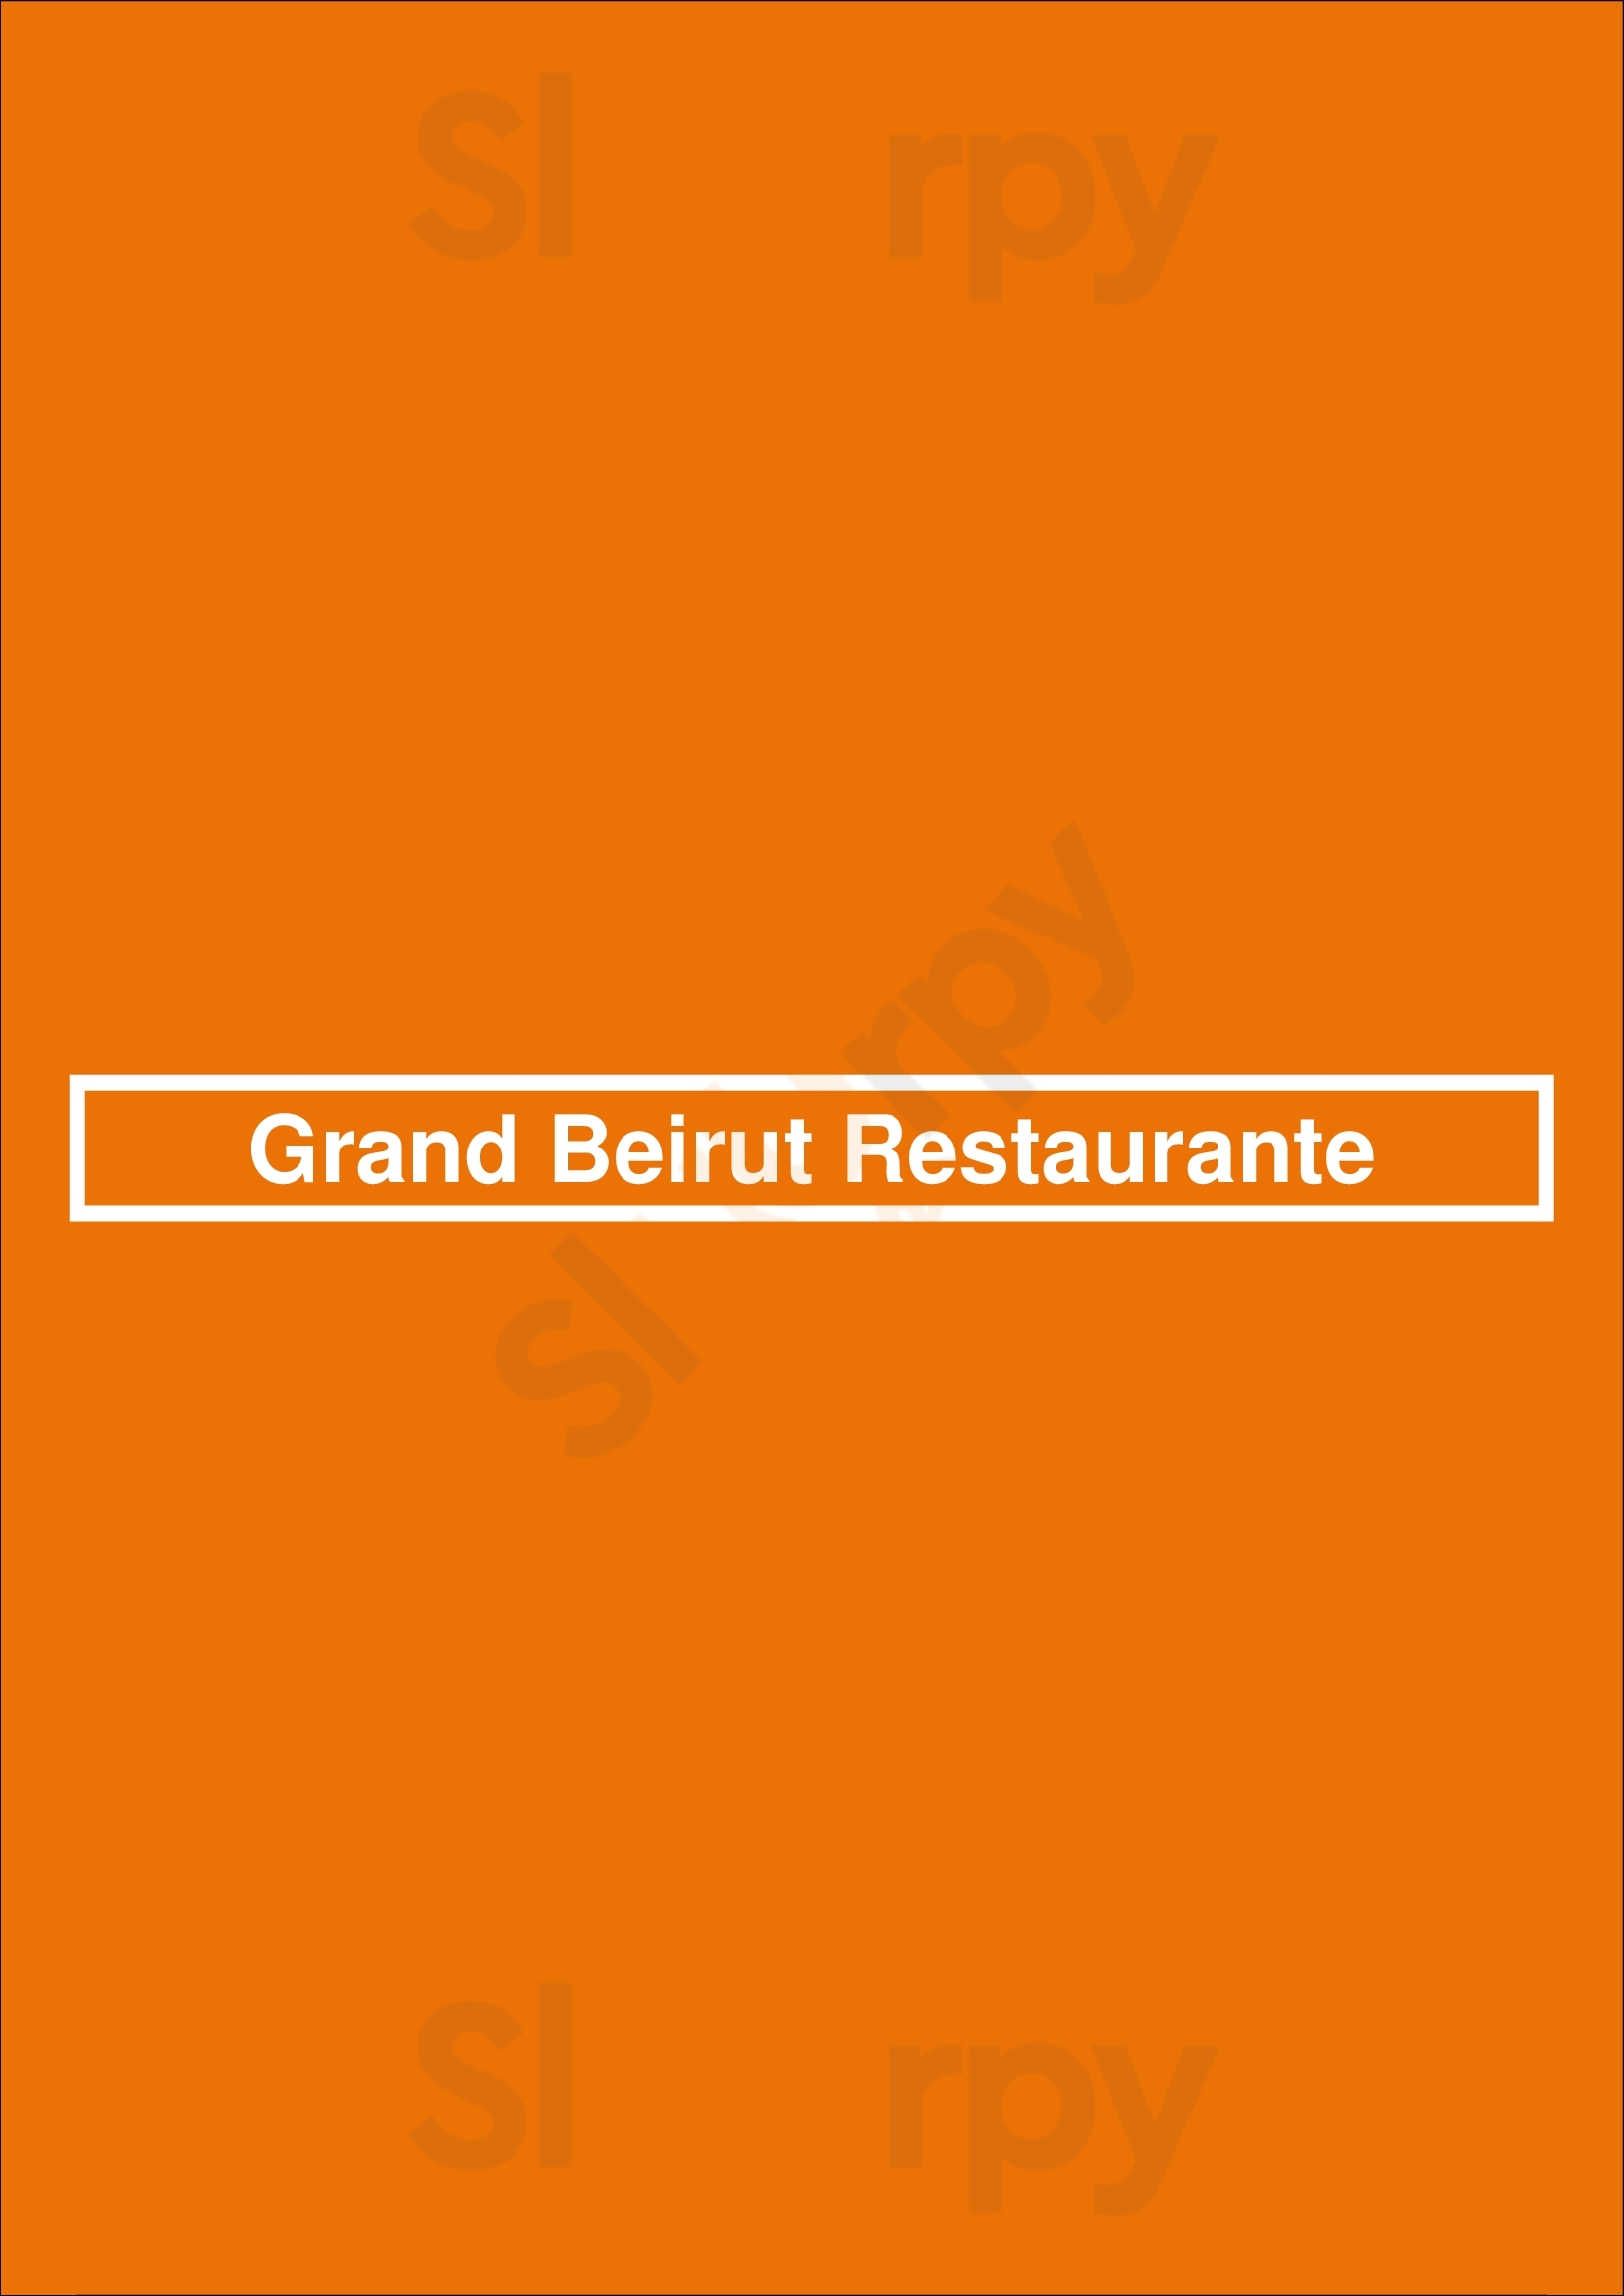 Grand Beirut Restaurant Barcelona Menu - 1